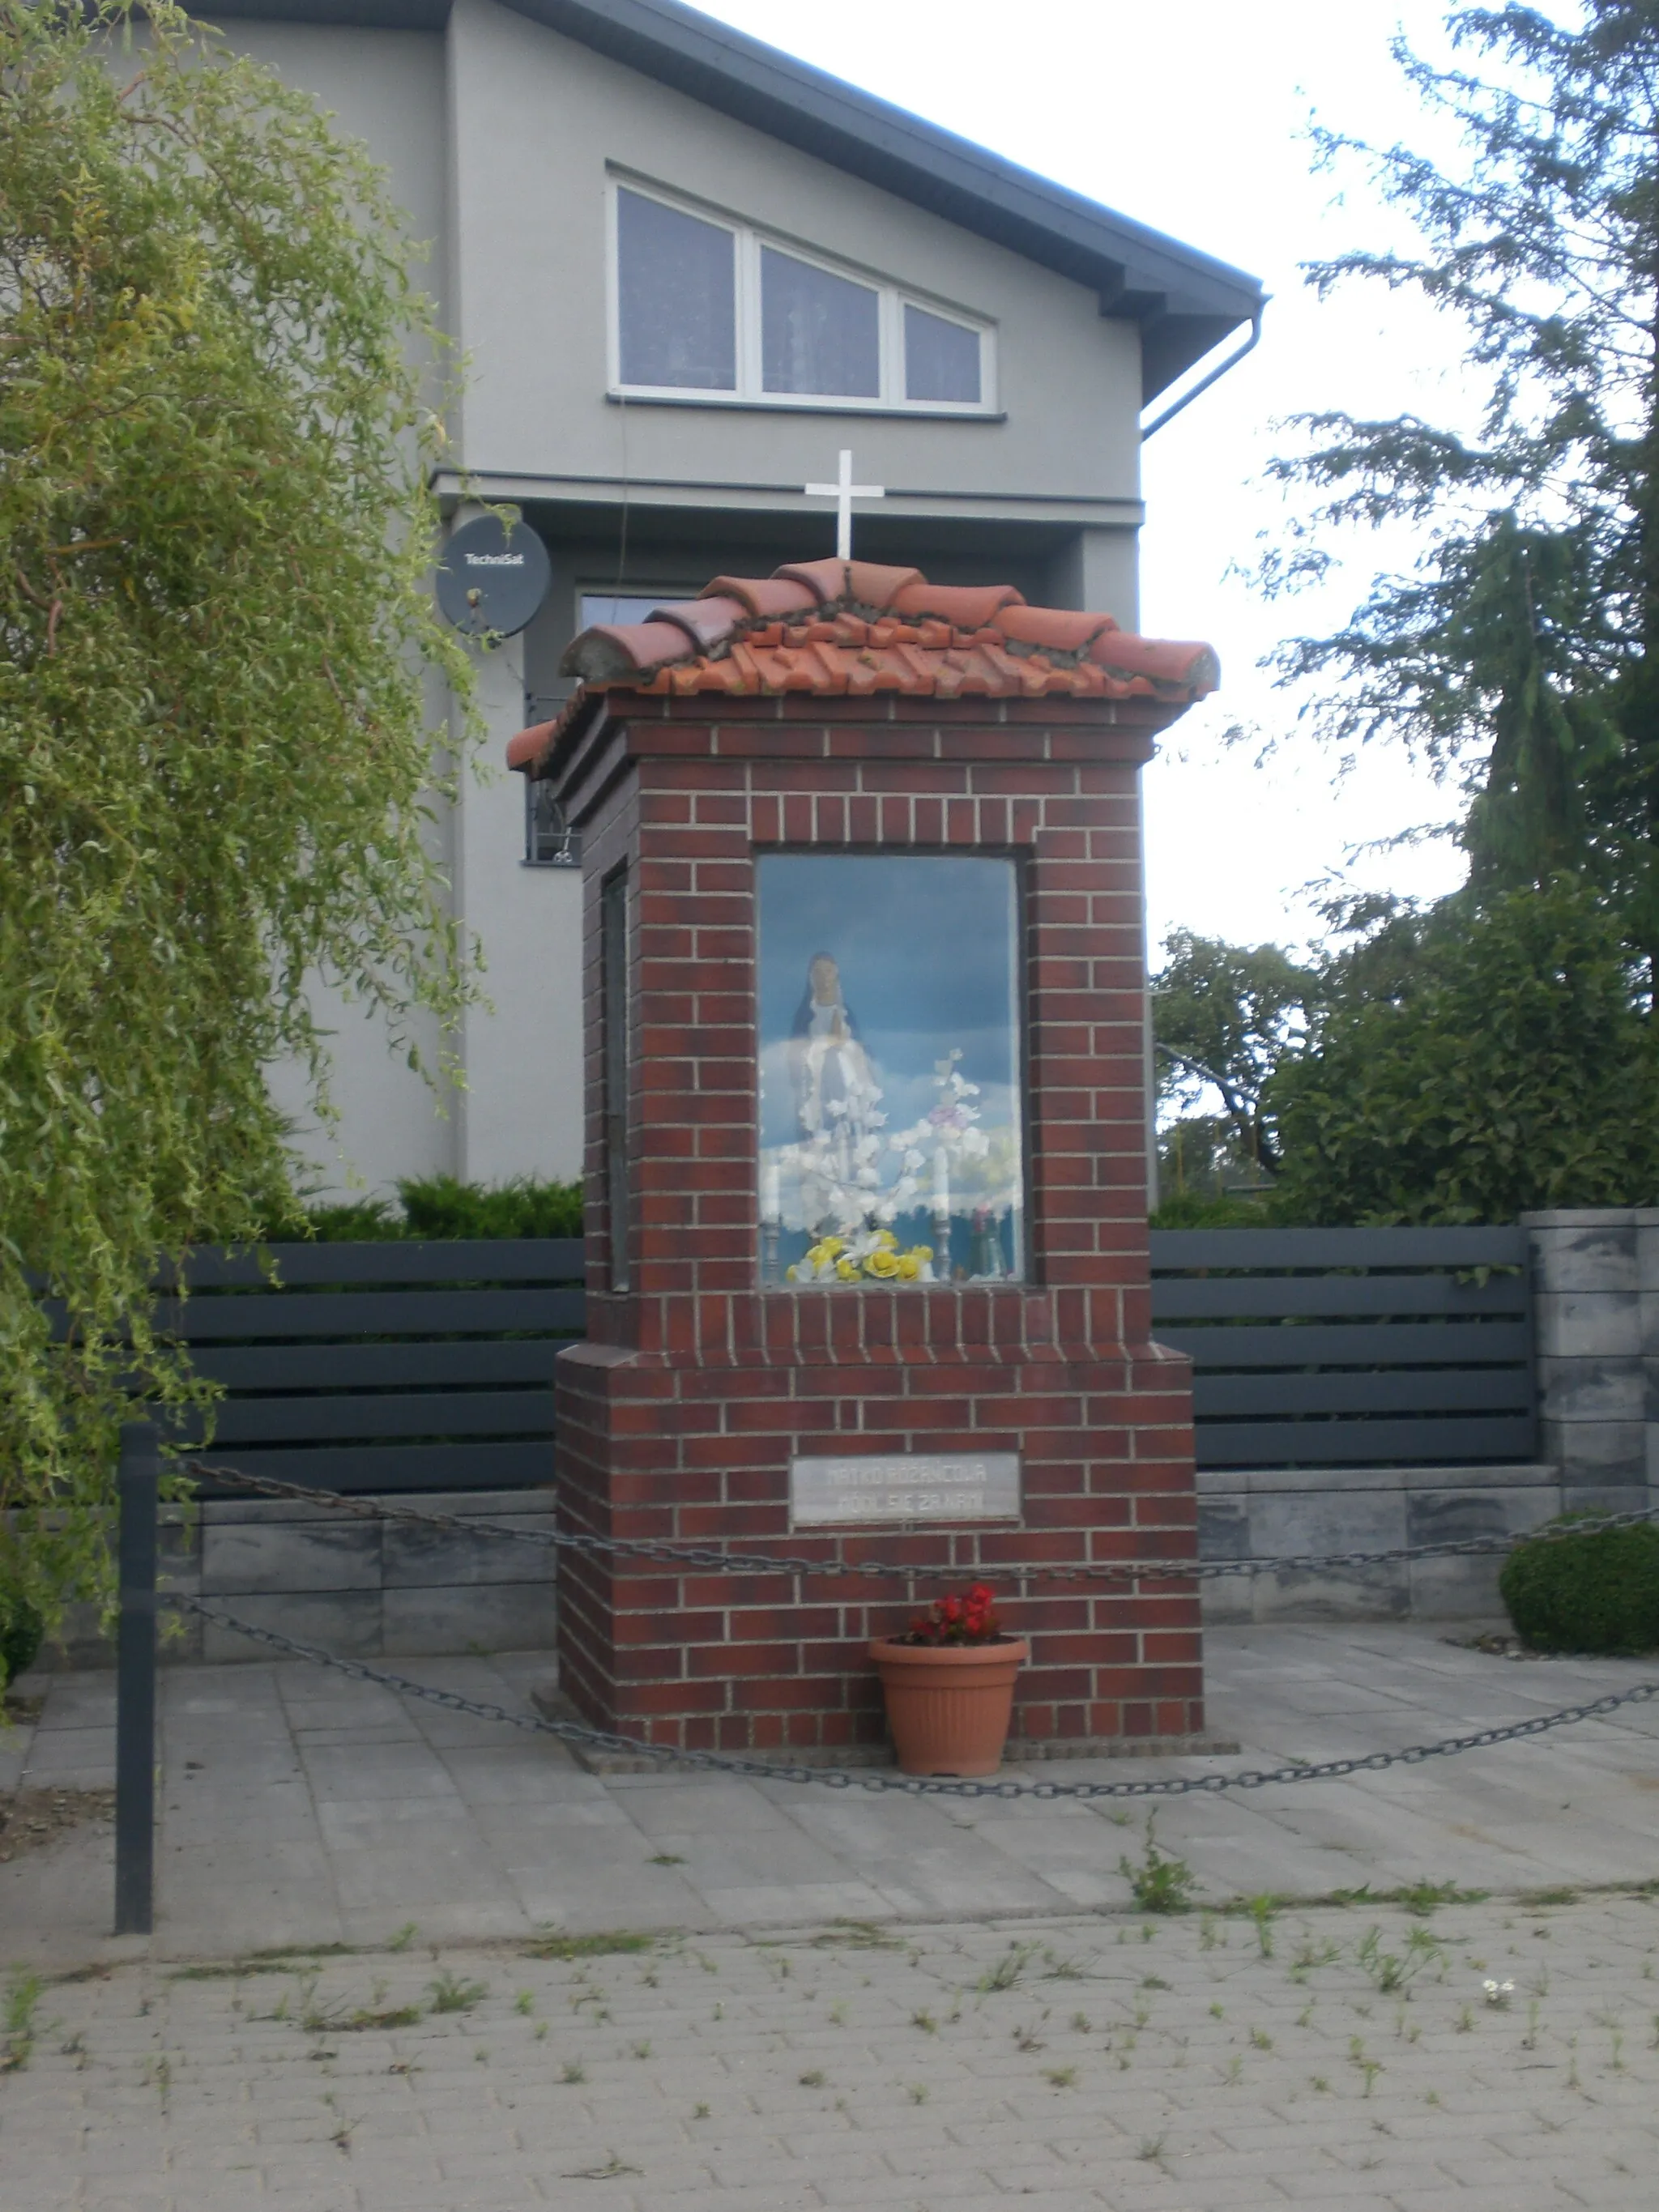 Photo showing: Kochanowo